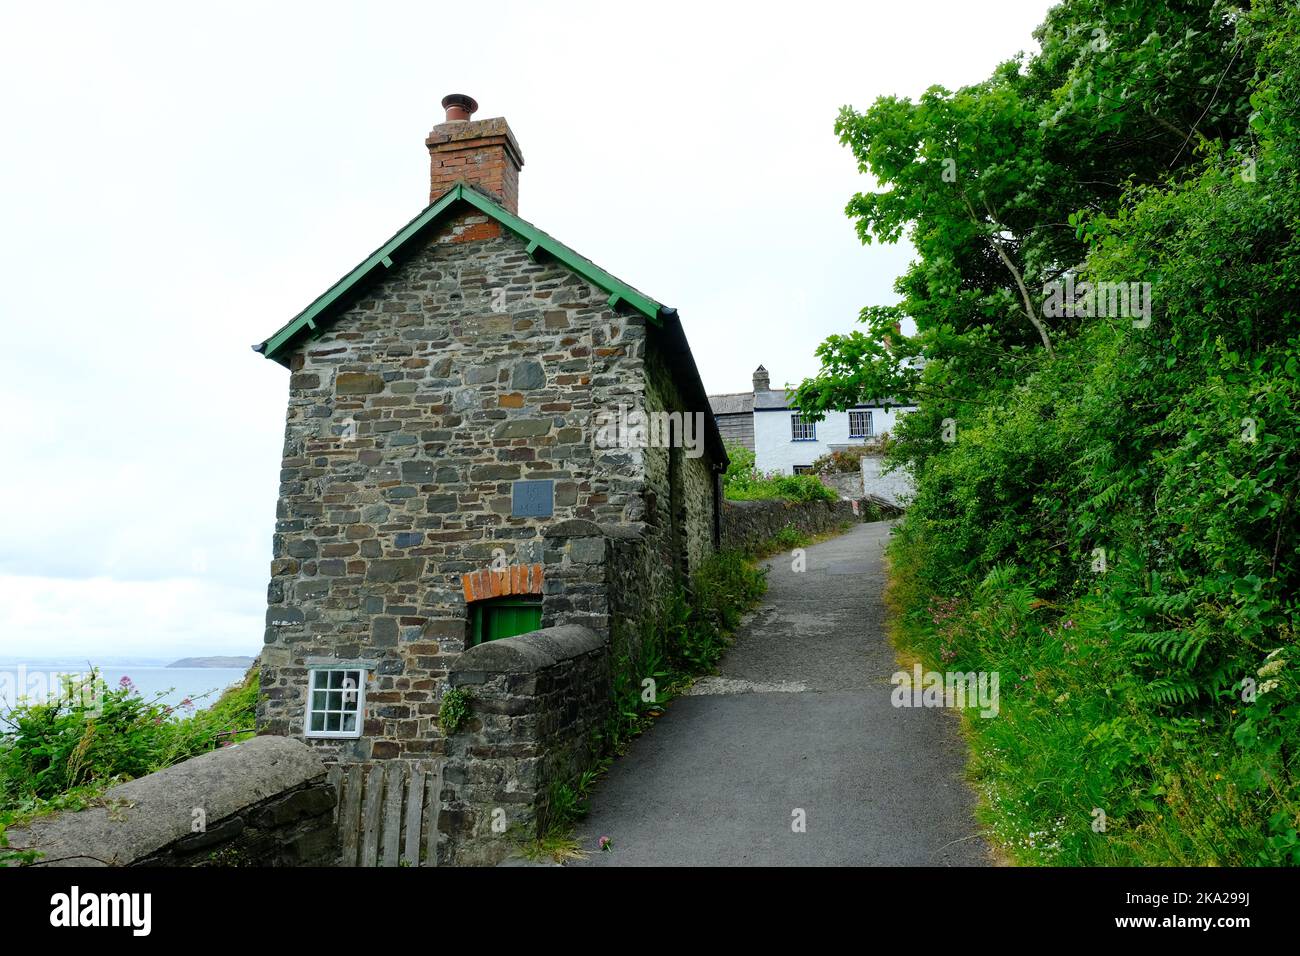 Holiday cottage at Bucks Mills on the North Devon coast, UK - John Gollop Stock Photo